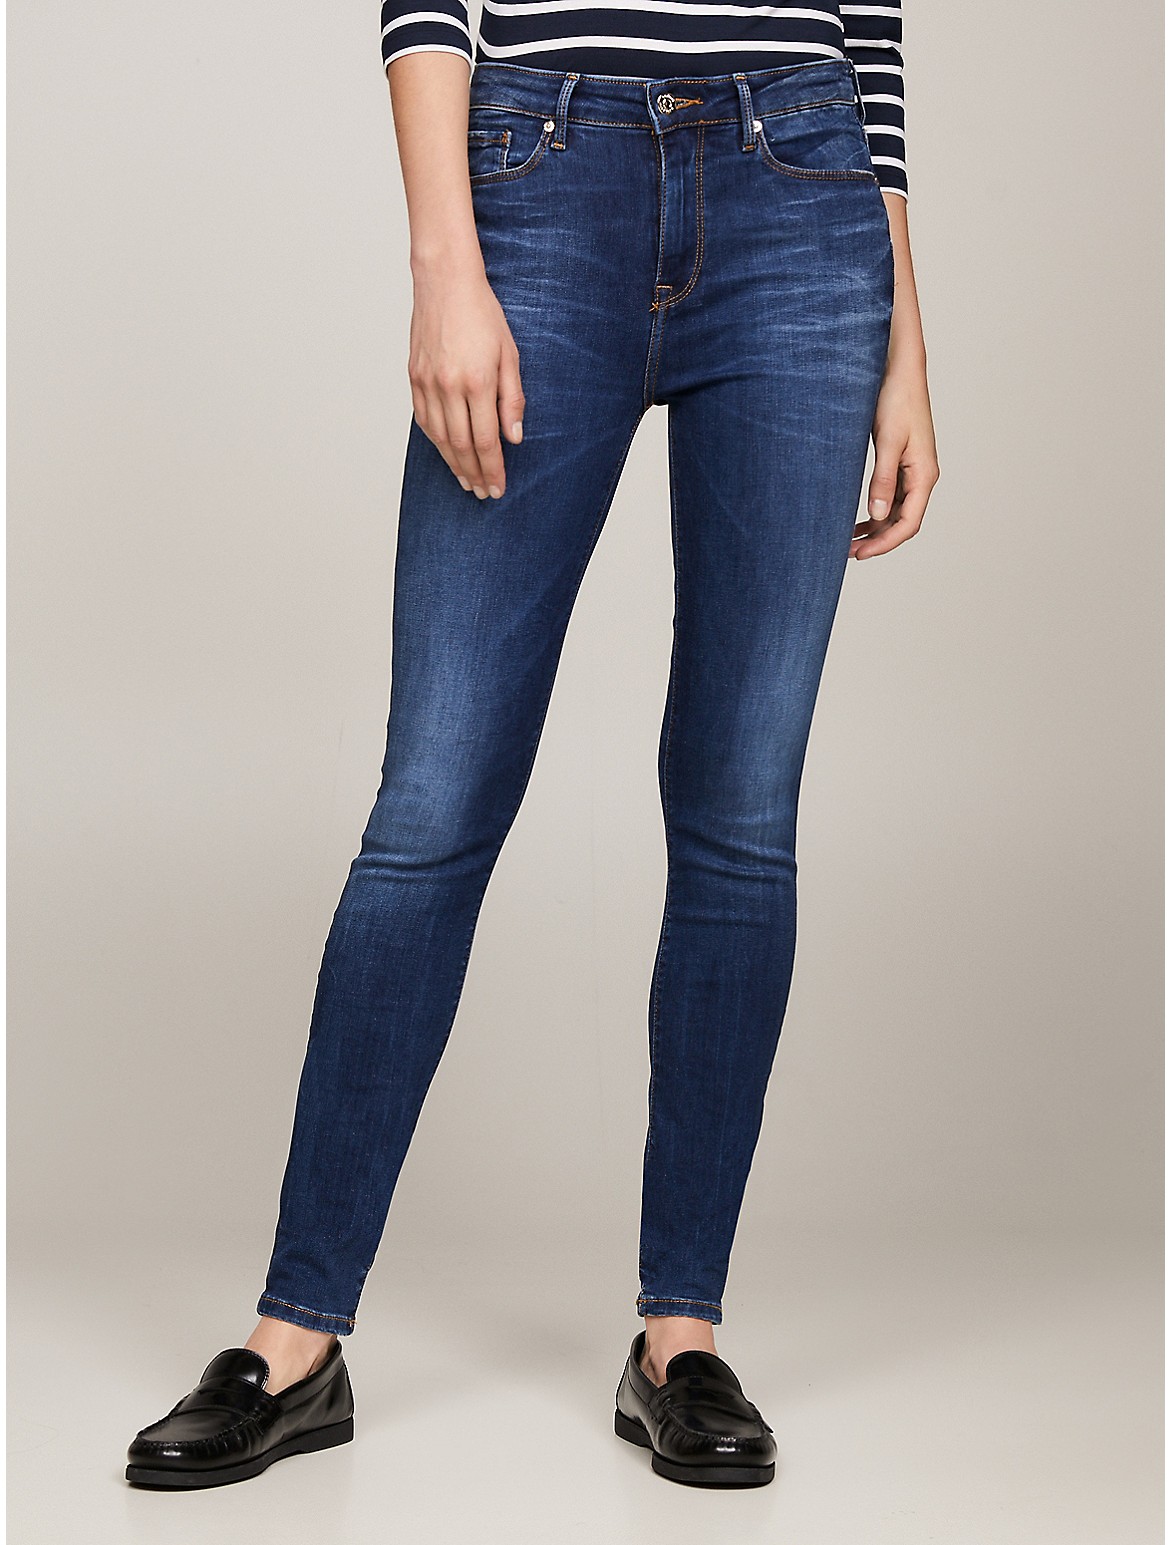 Tommy Hilfiger Women's Super Skinny Fit Jean